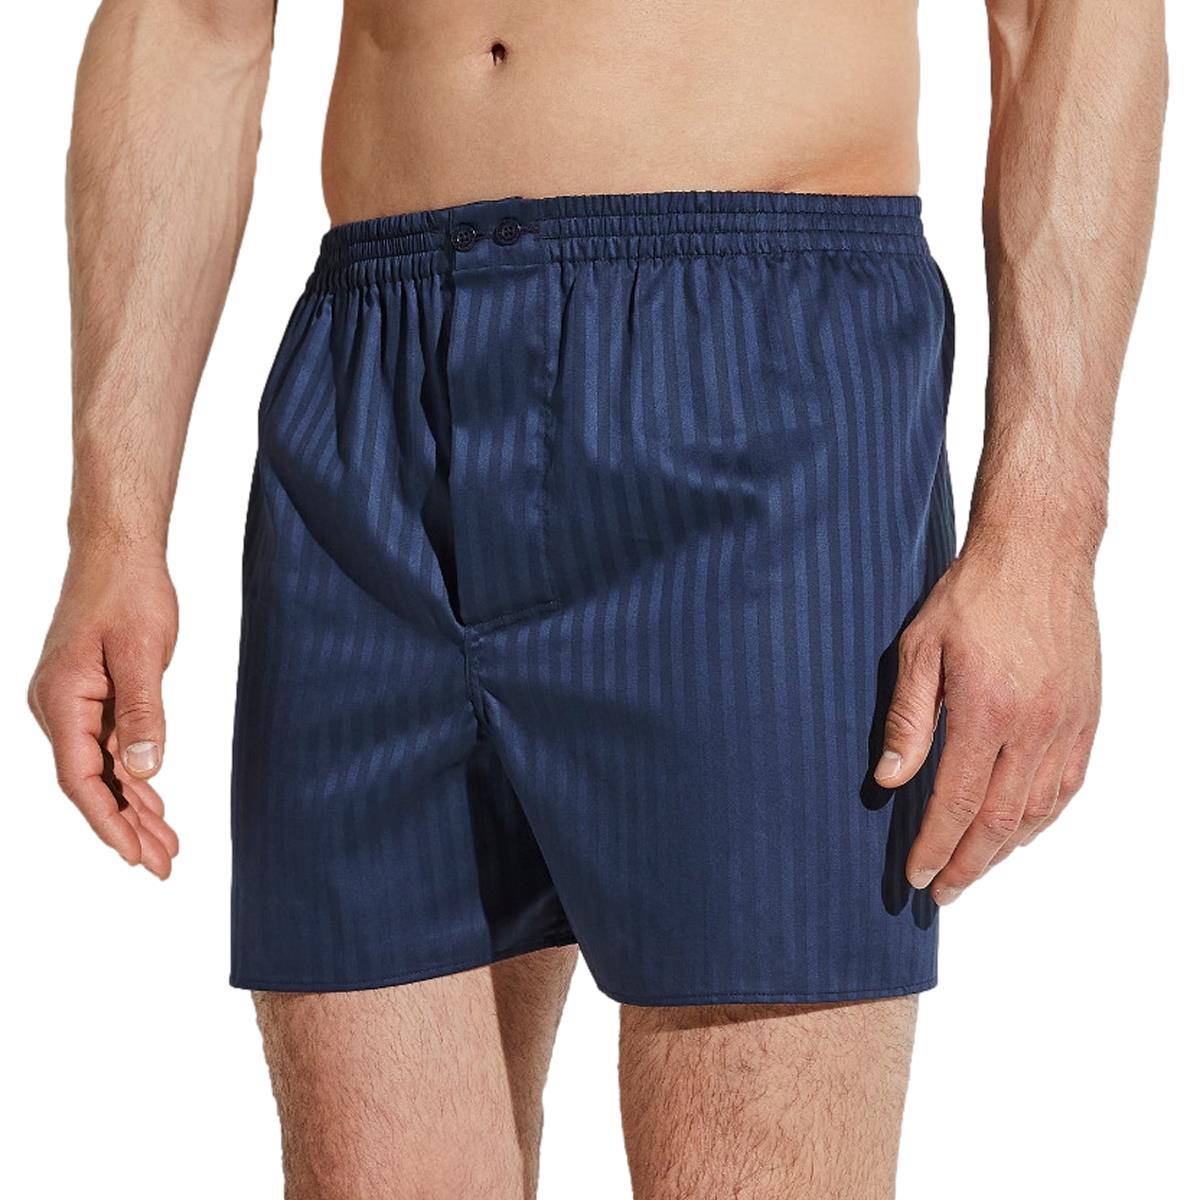 Woven Cotton Striped Boxer Shorts - Men's